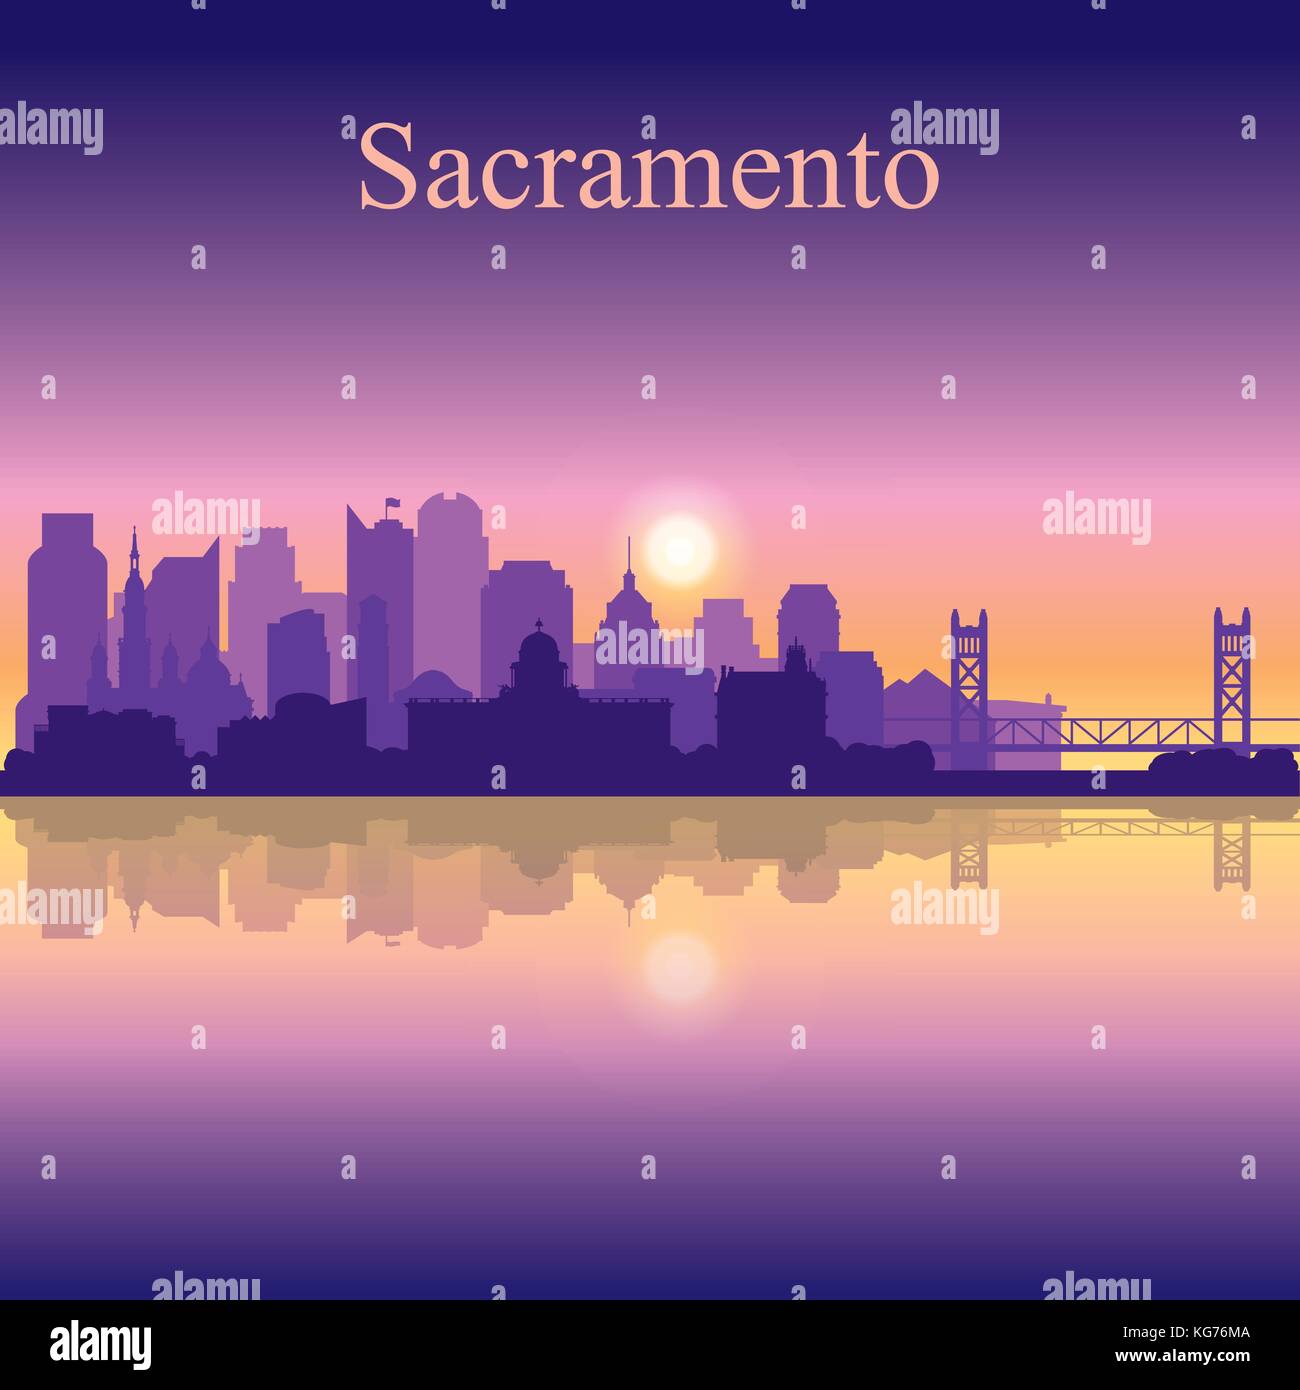 Sacramento silhouette on sunset background vector illustration Stock Vector